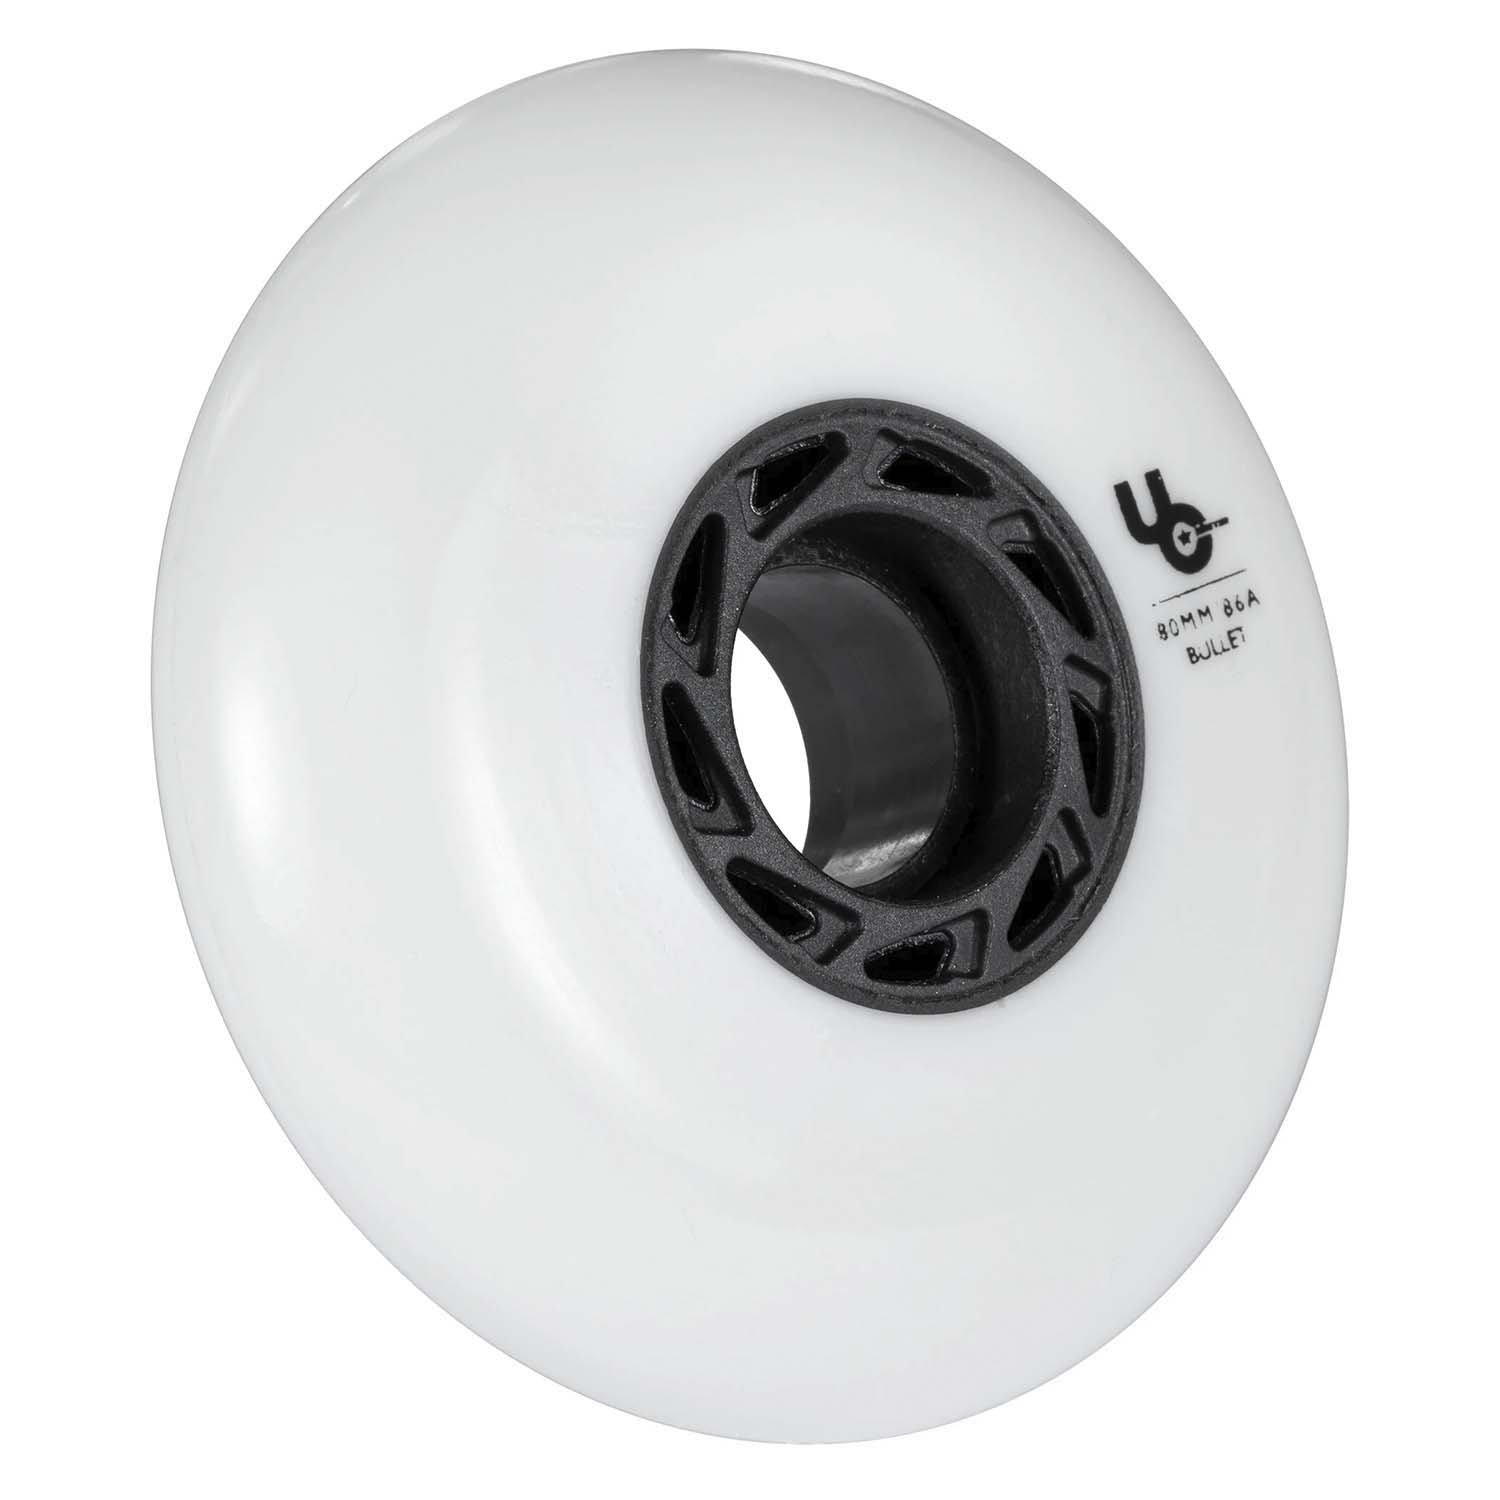 Комплект колёс для роликов UNDERCOVER Team 80/86A 4-pack White